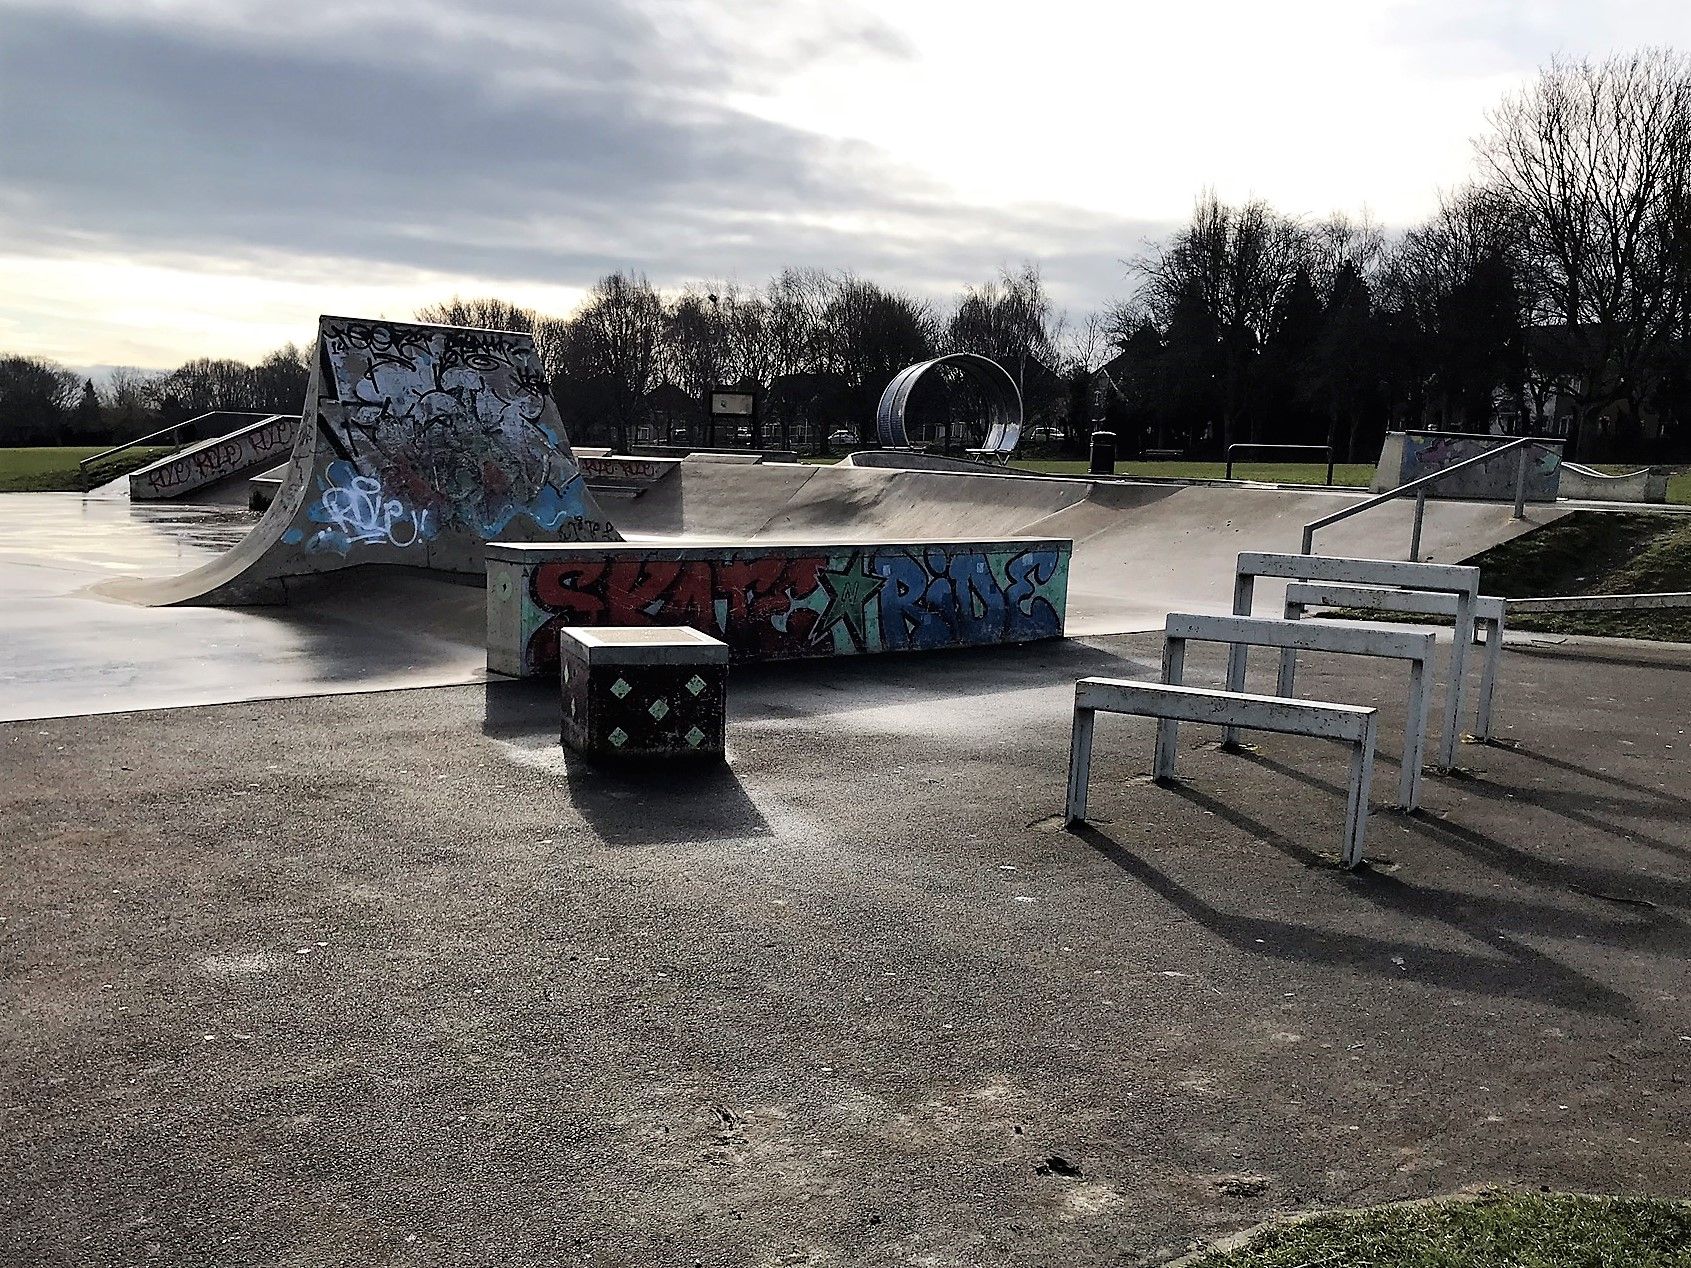 Skate park ramps